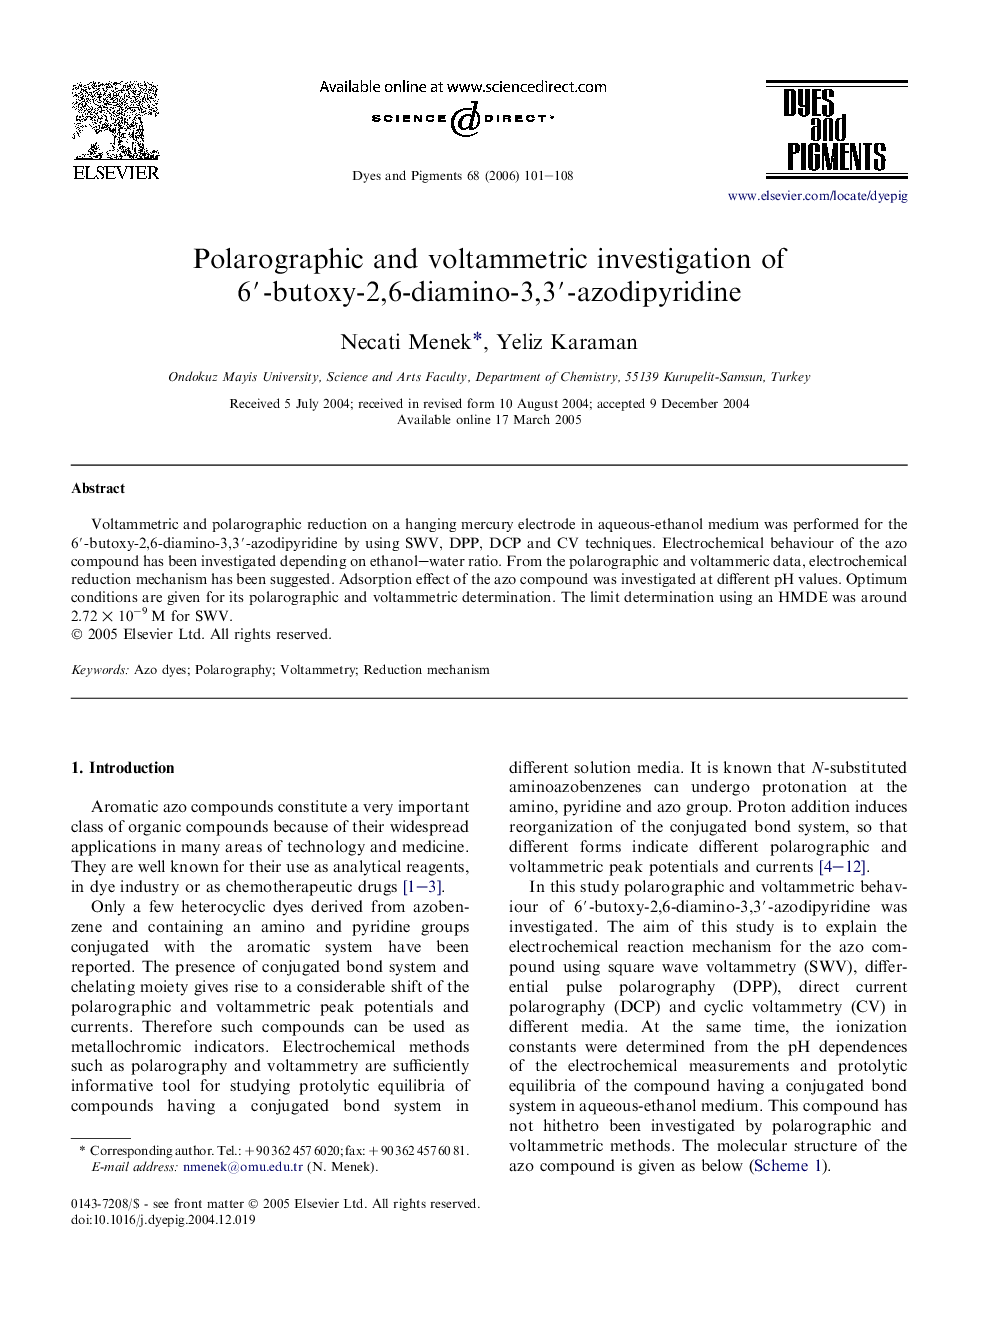 Polarographic and voltammetric investigation of 6′-butoxy-2,6-diamino-3,3′-azodipyridine